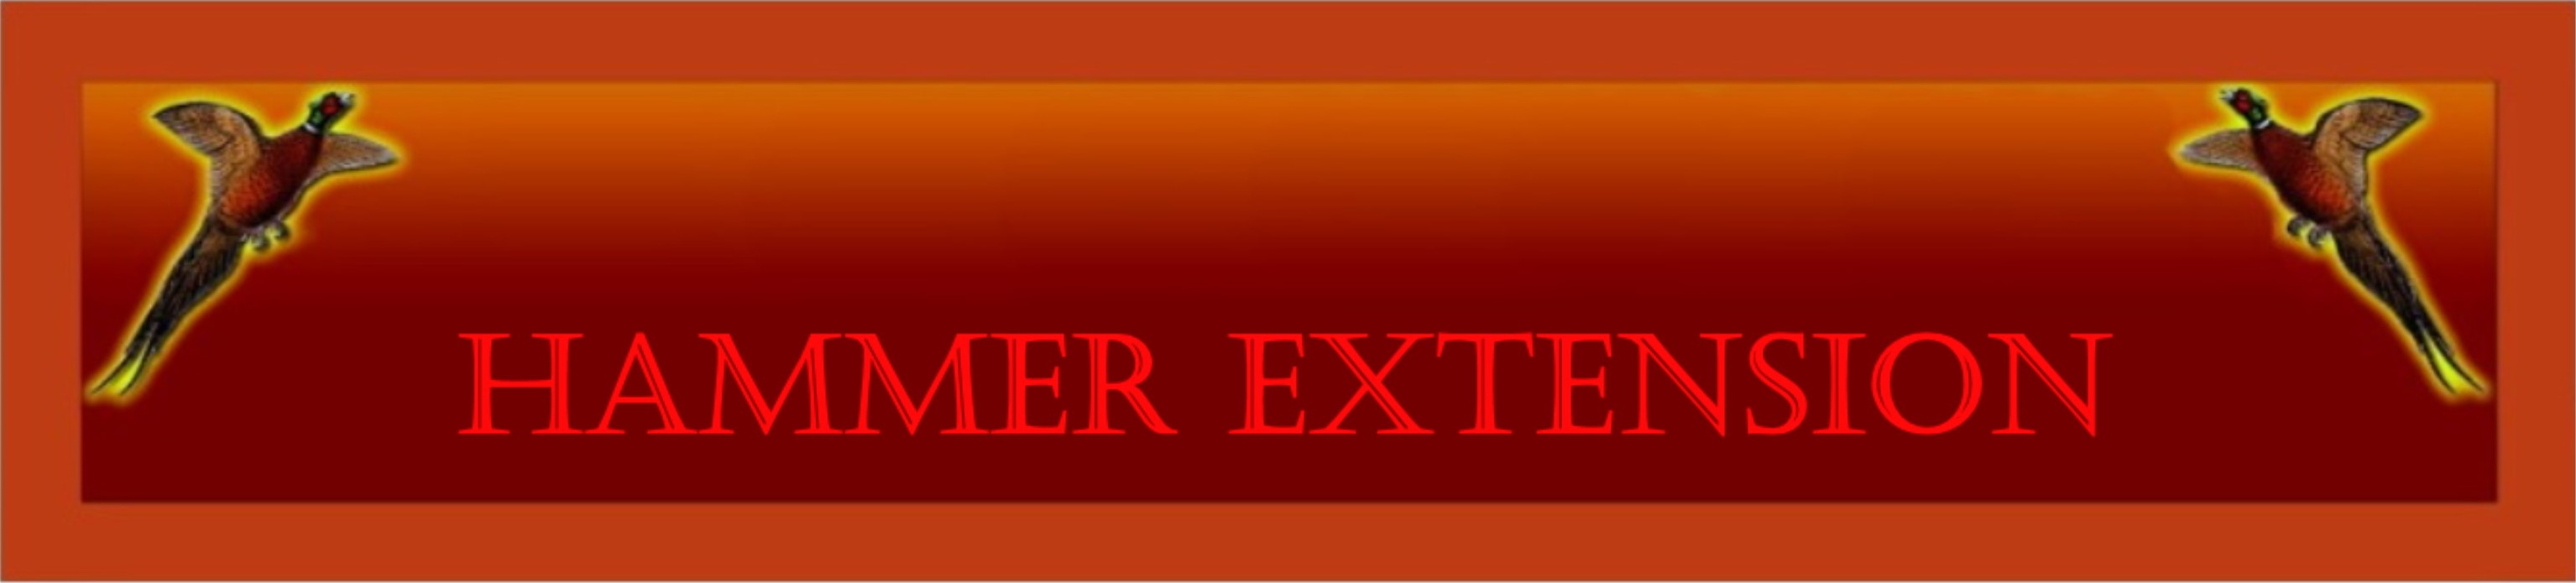 Direct link Hammer Extension shop Proarme